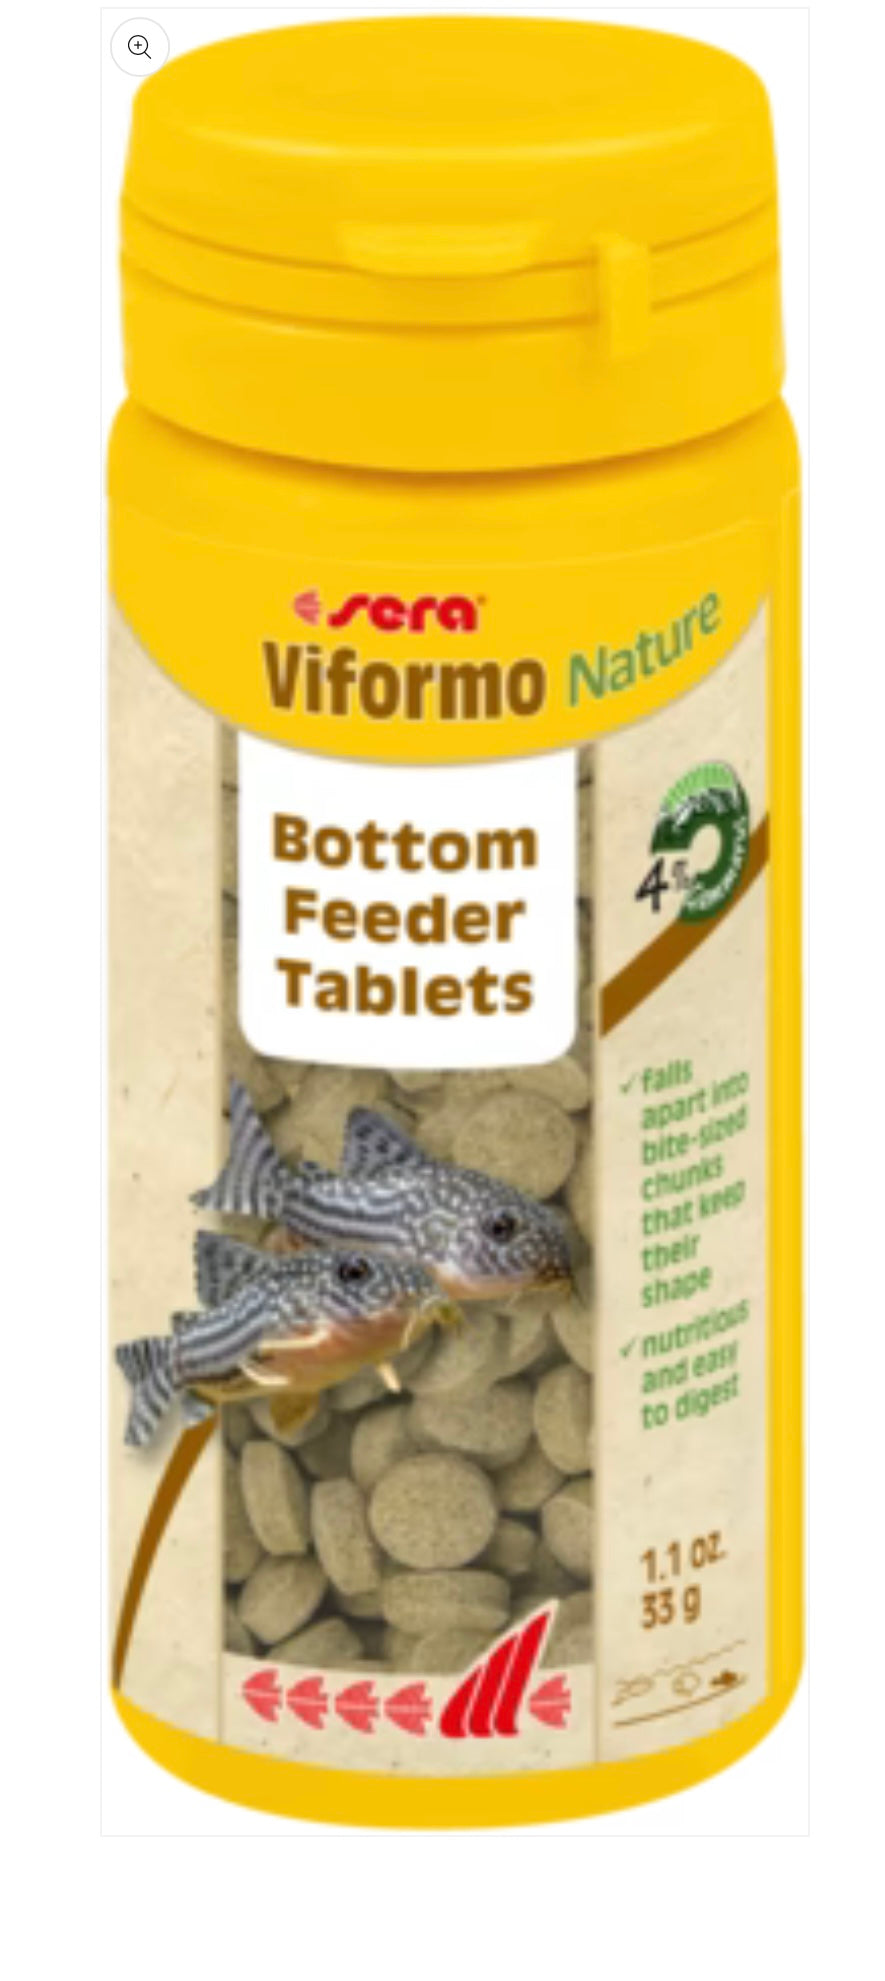 Sera viformo nature bottom feeder tablets